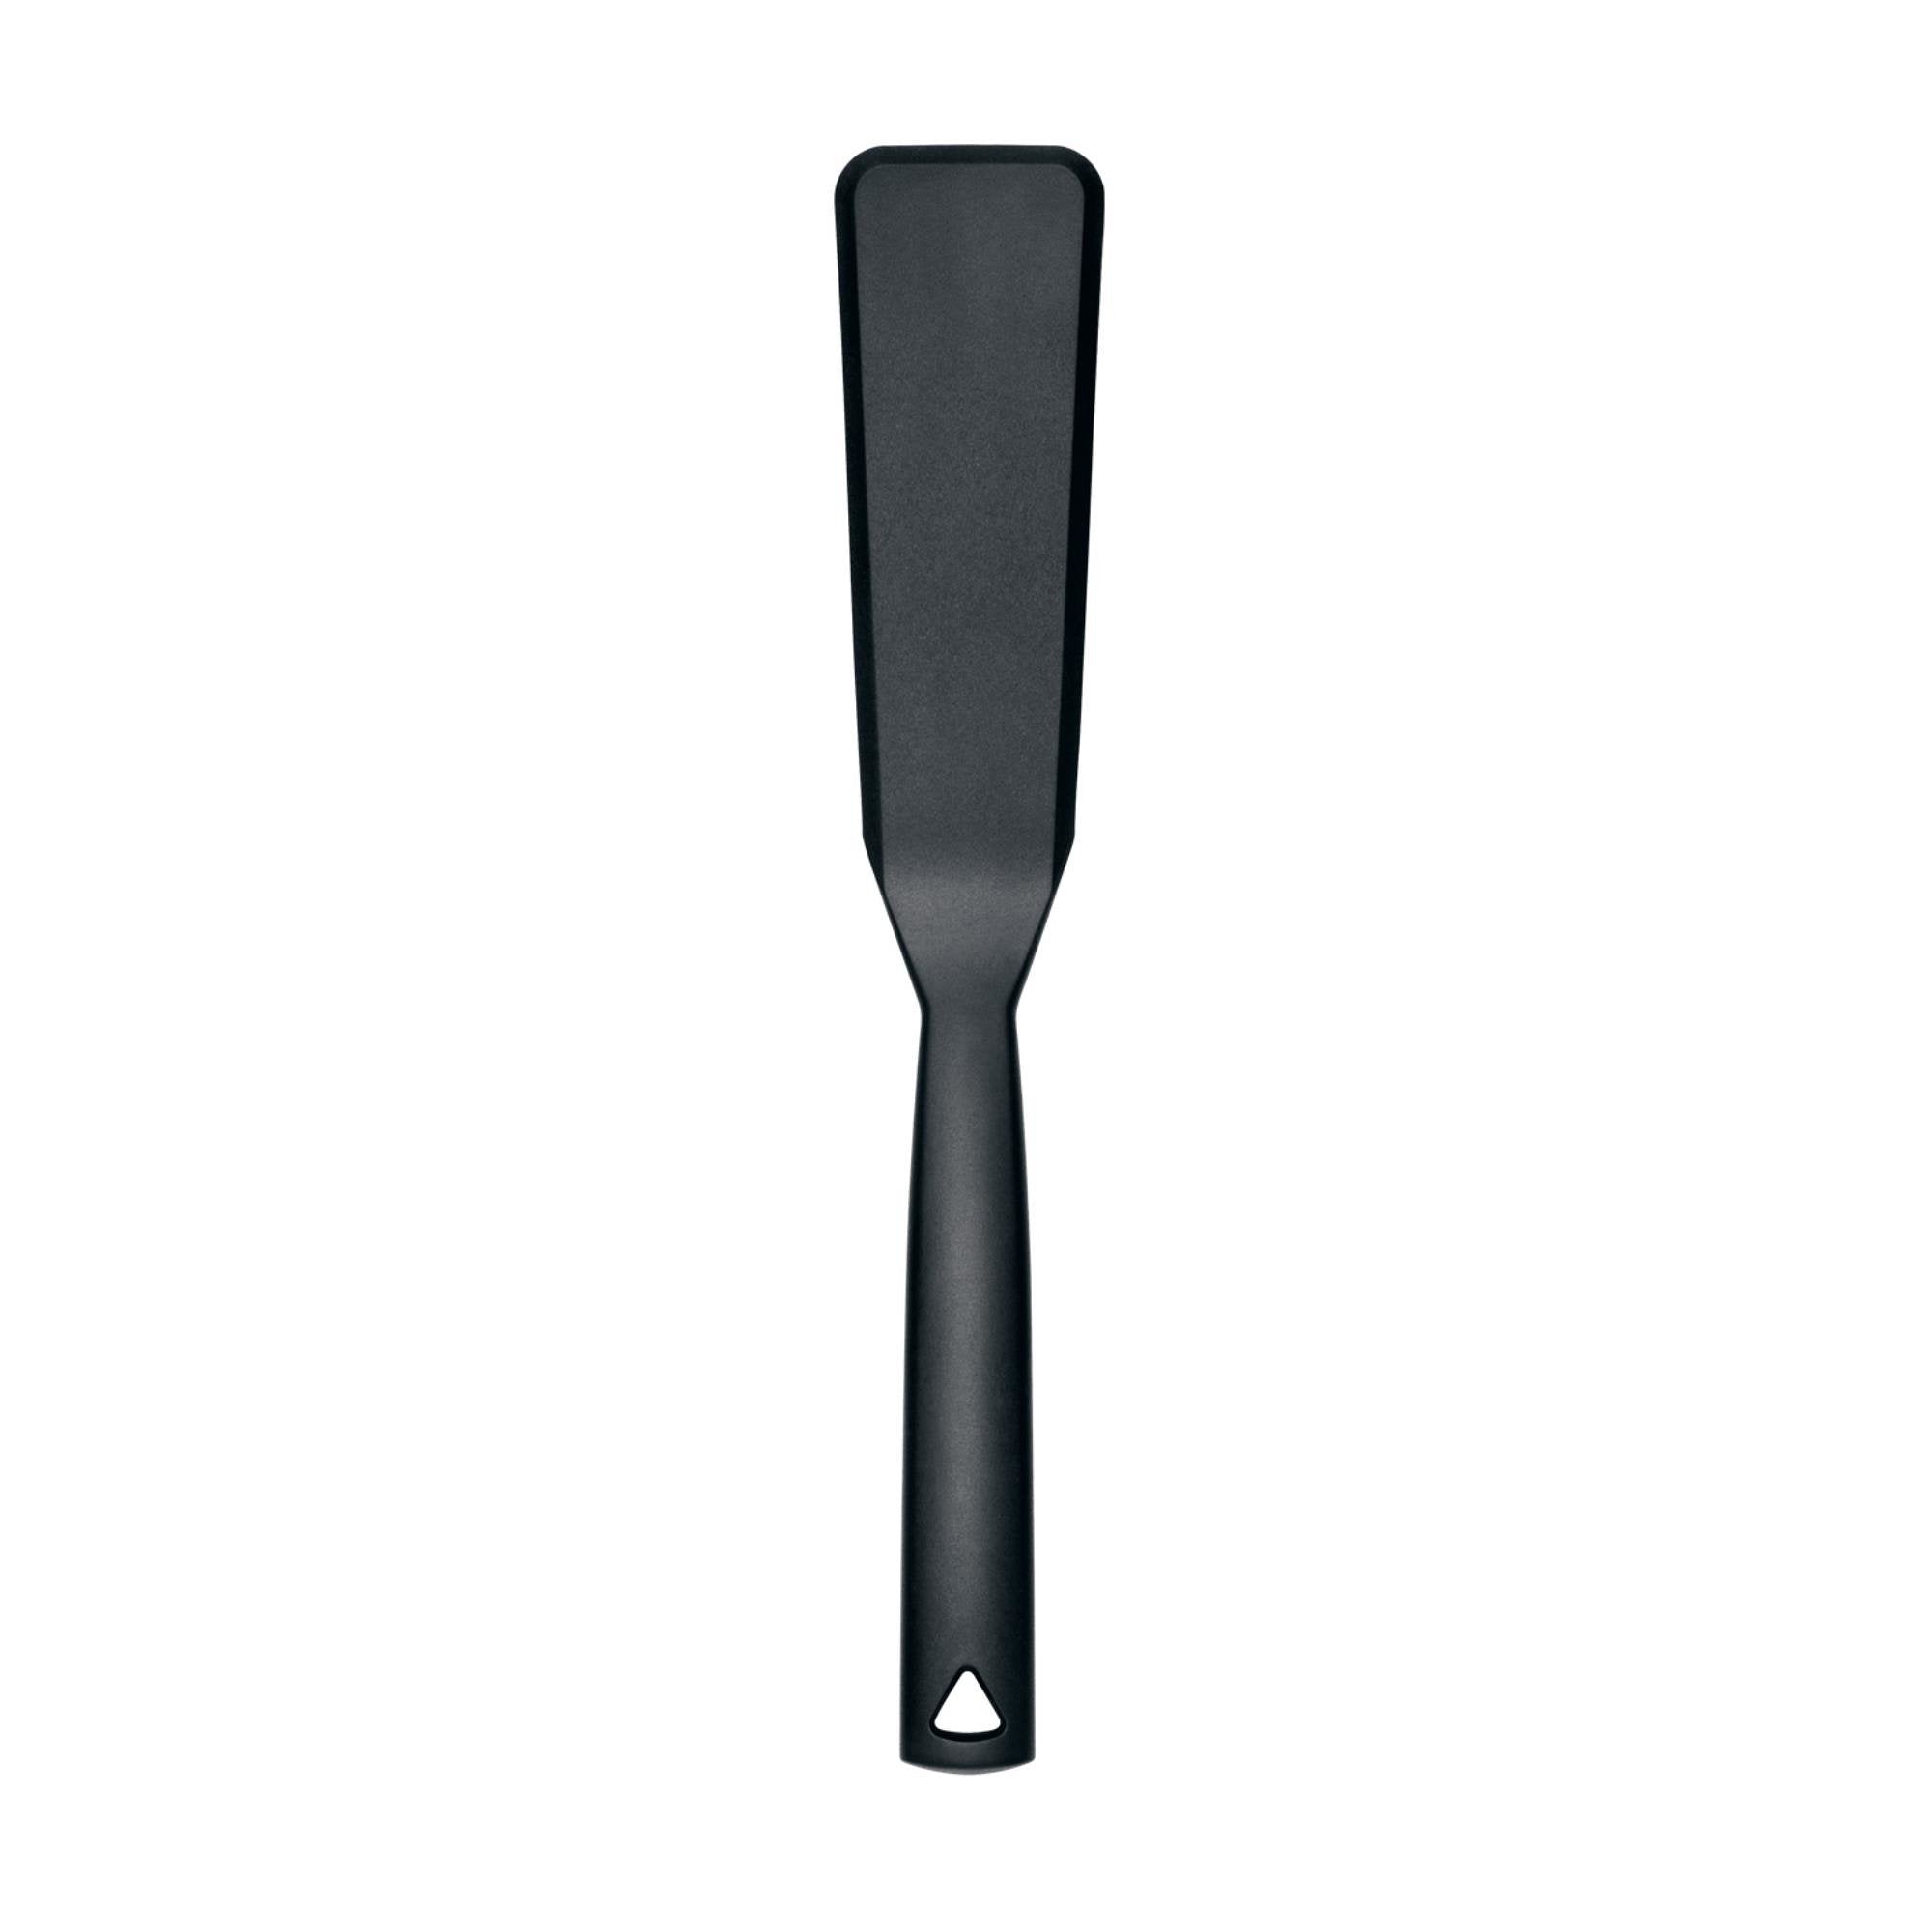 Triangle Hittebestendige Nylon Spatel met Ophangsysteem - 30 cm - Zwart